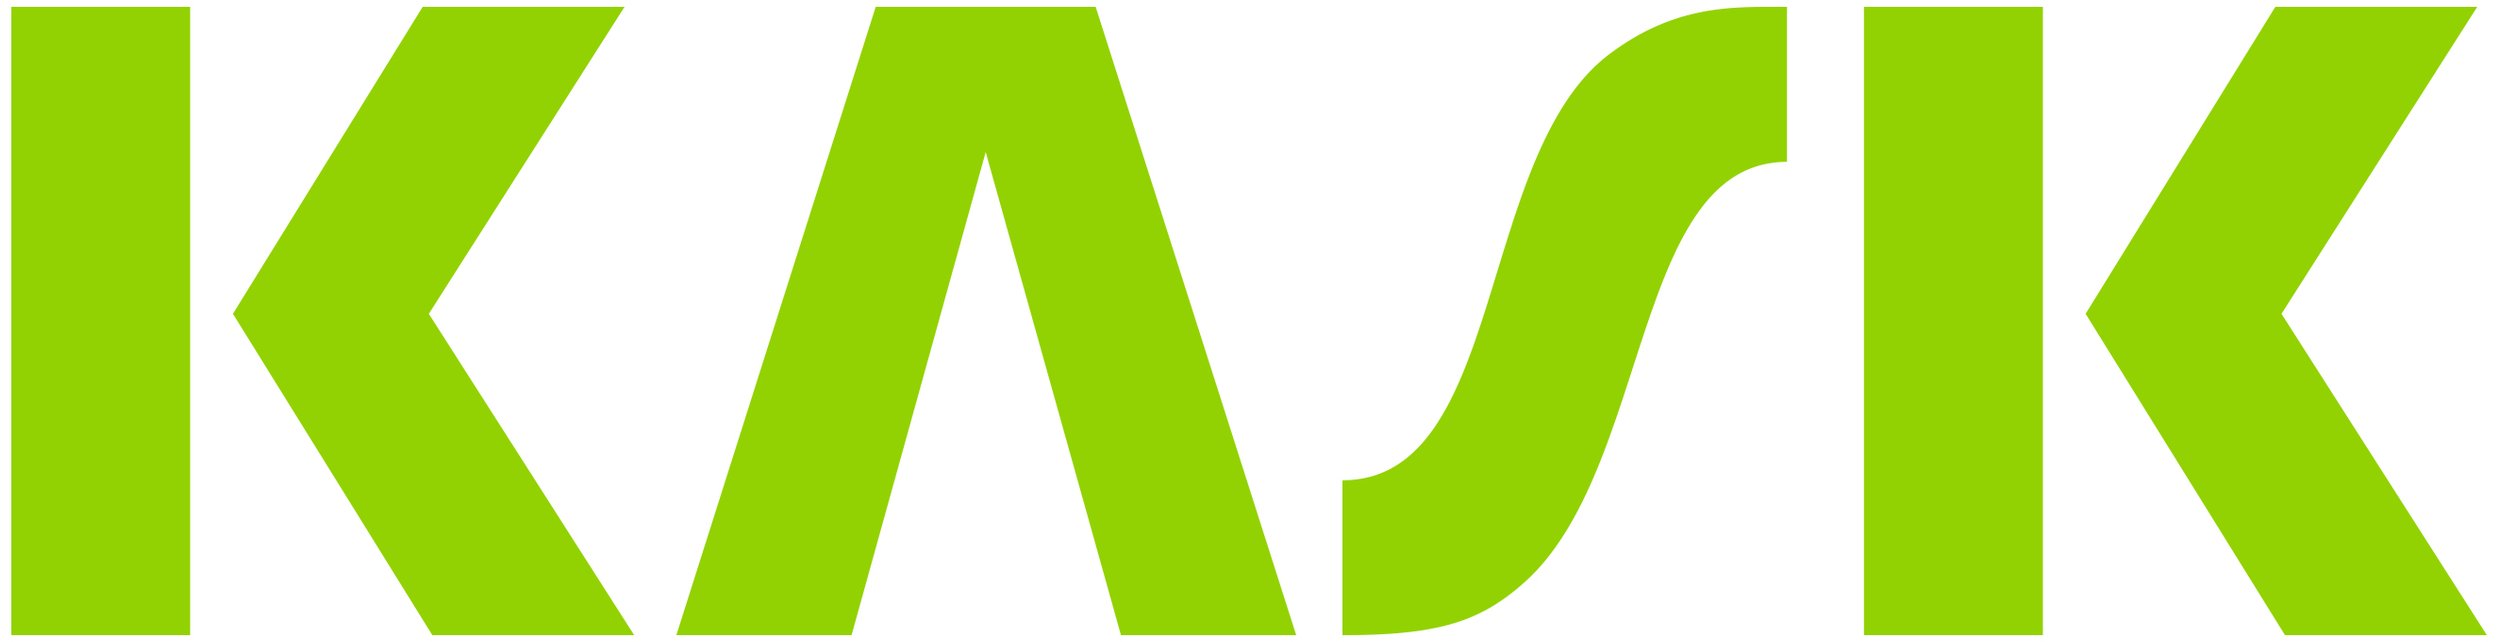 KASK_logo_verde.jpg